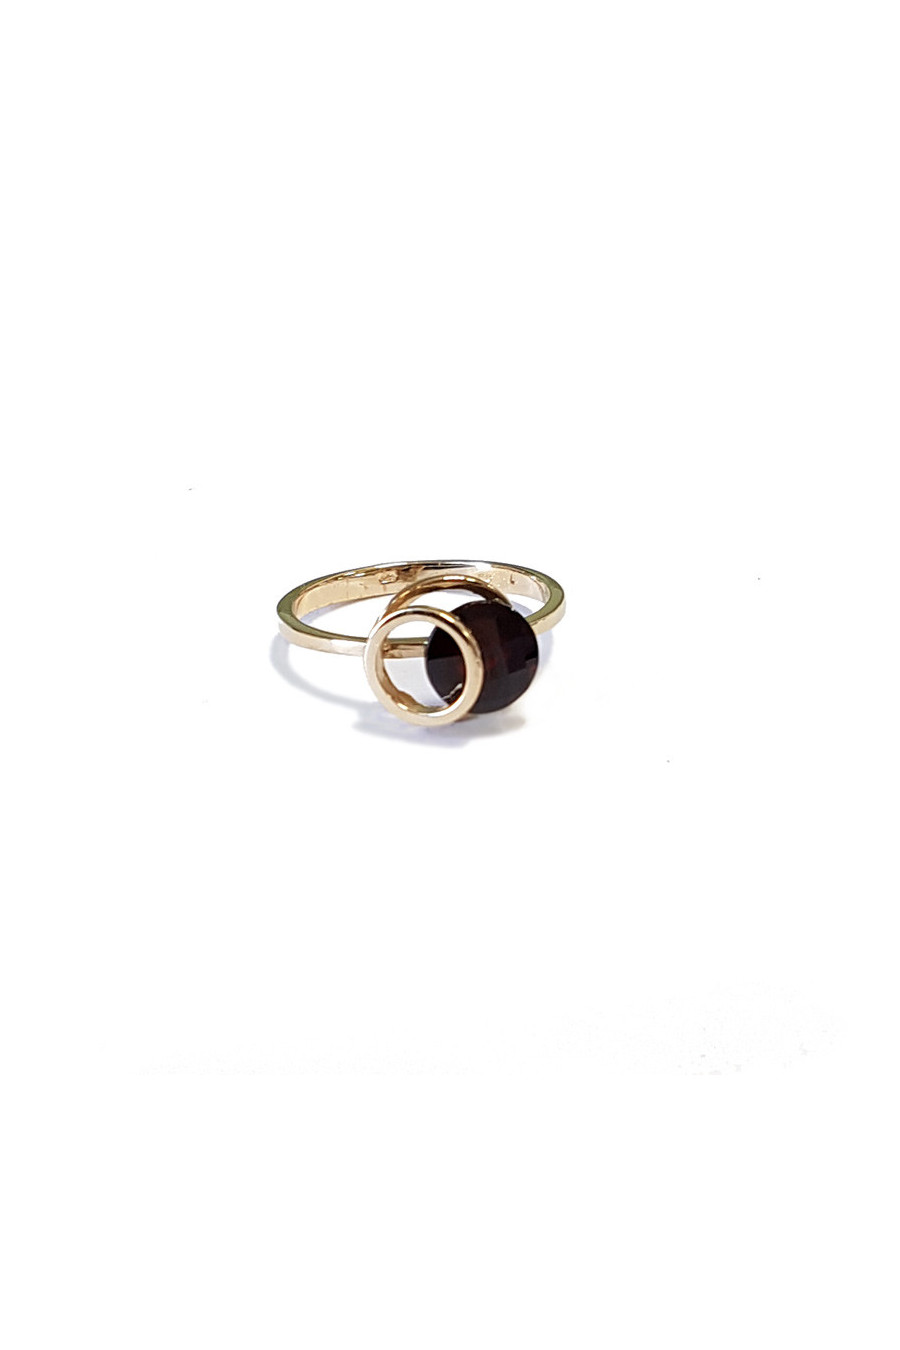 Gold ring, garnet